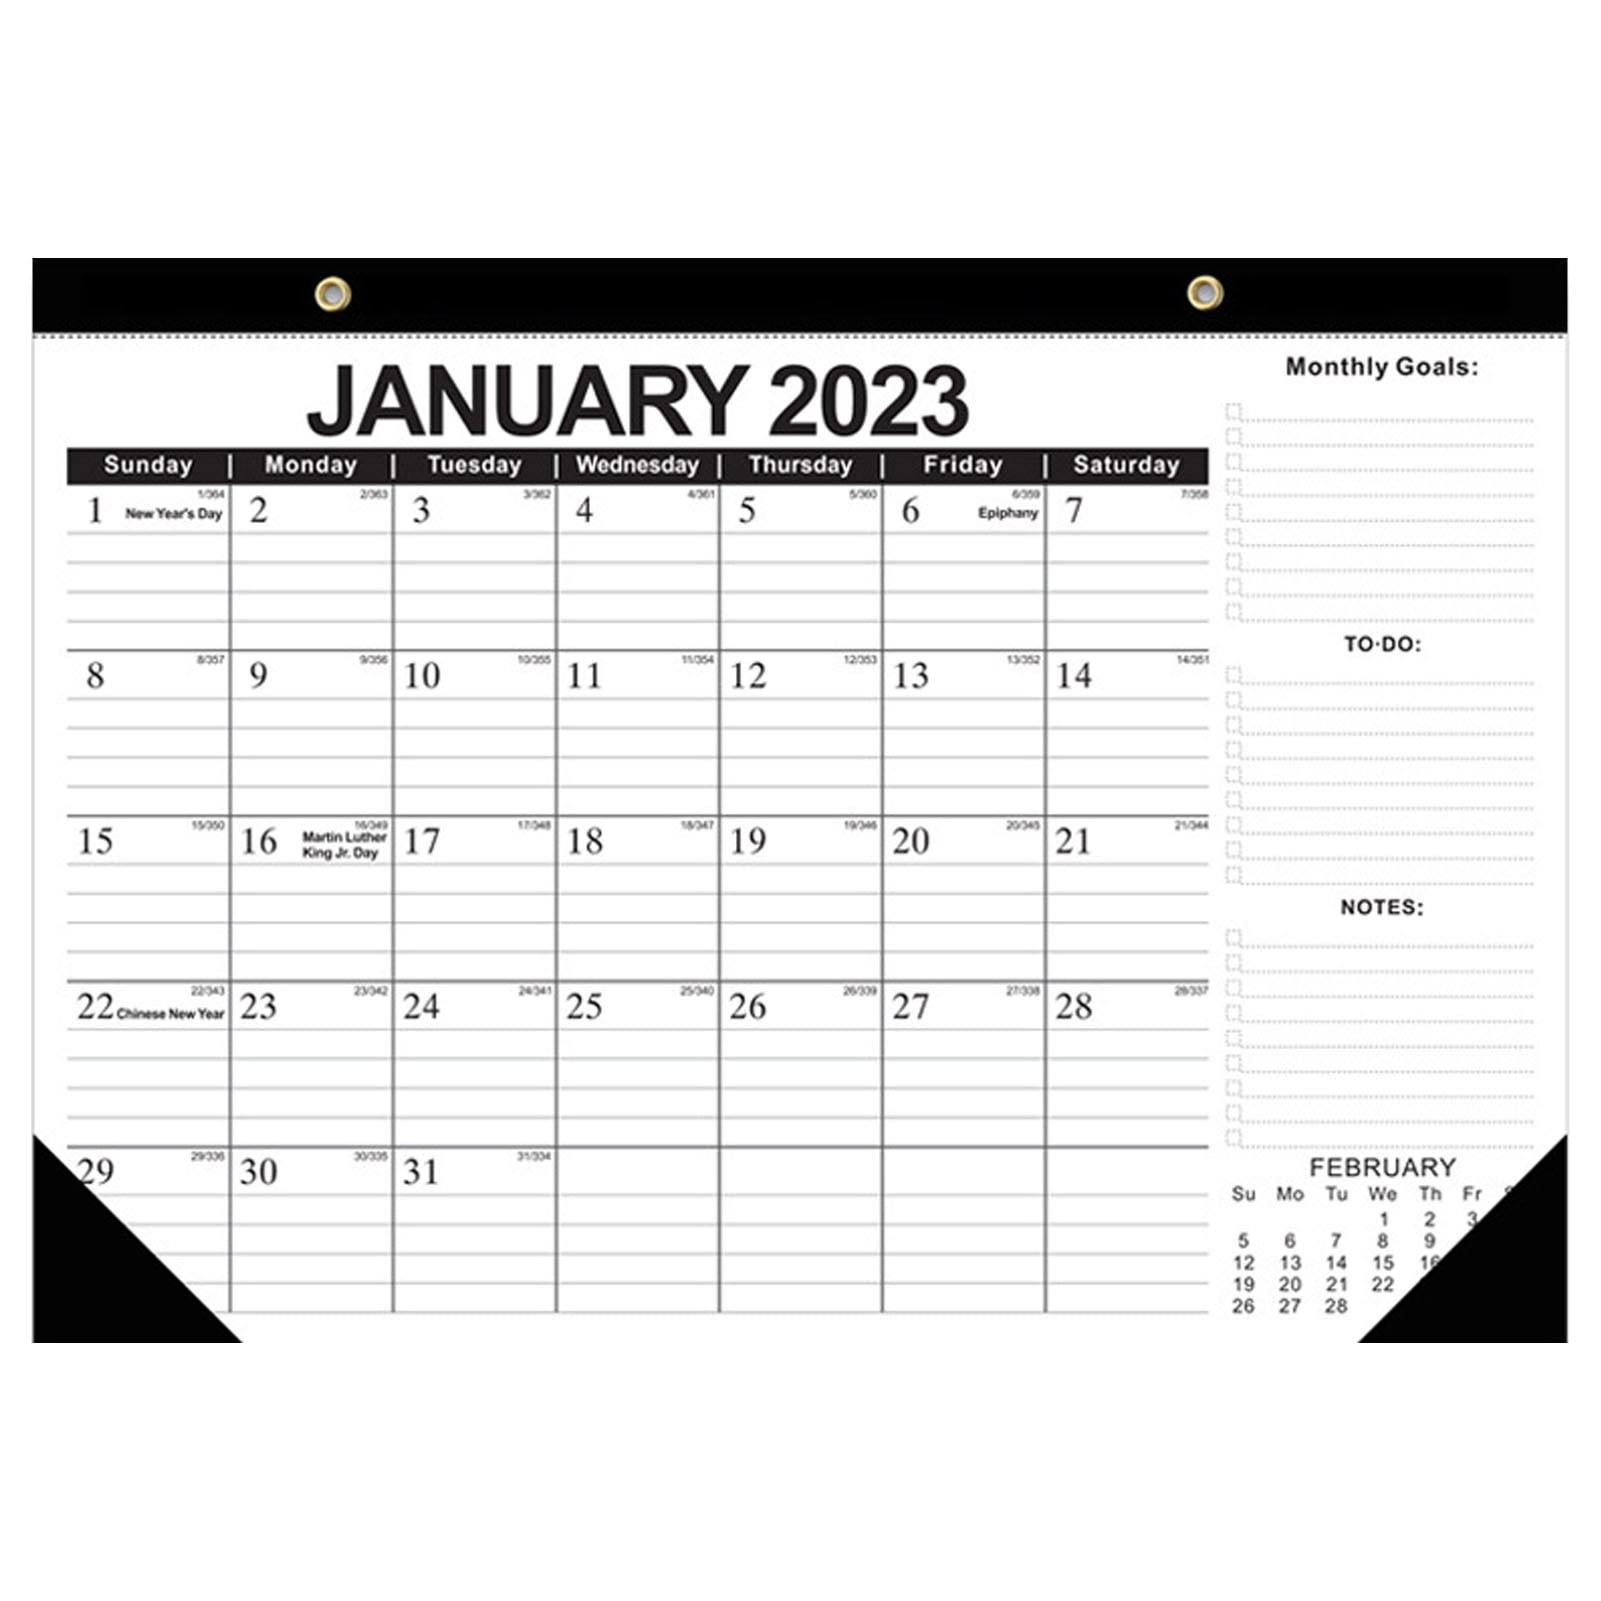 Desk Calendar 2022-2023 To-do List & Notes 17 x 12 Desk Pad Best Desk Calendar for Organizing Large Ruled Blocks December 2023,18 Months Monthly Desk Calendar Calendar 2022-2023 from July 2022 